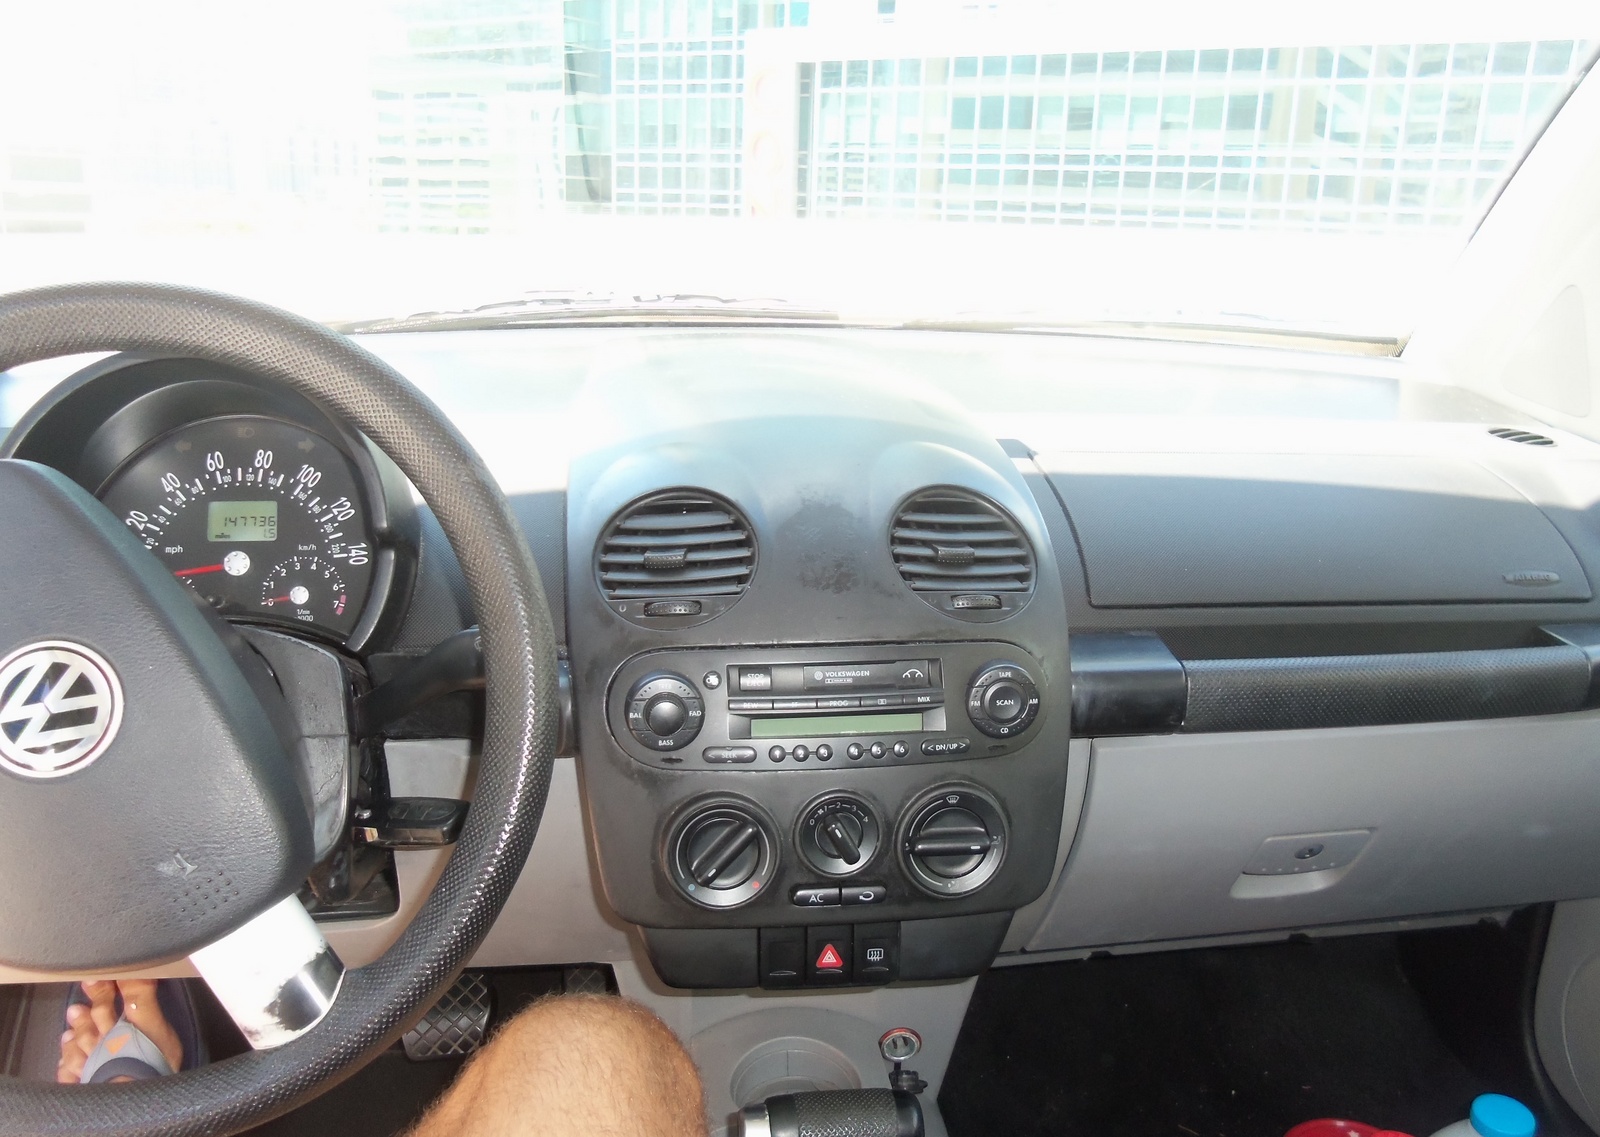 2000 vw beetle interior doors lever and mirror controls